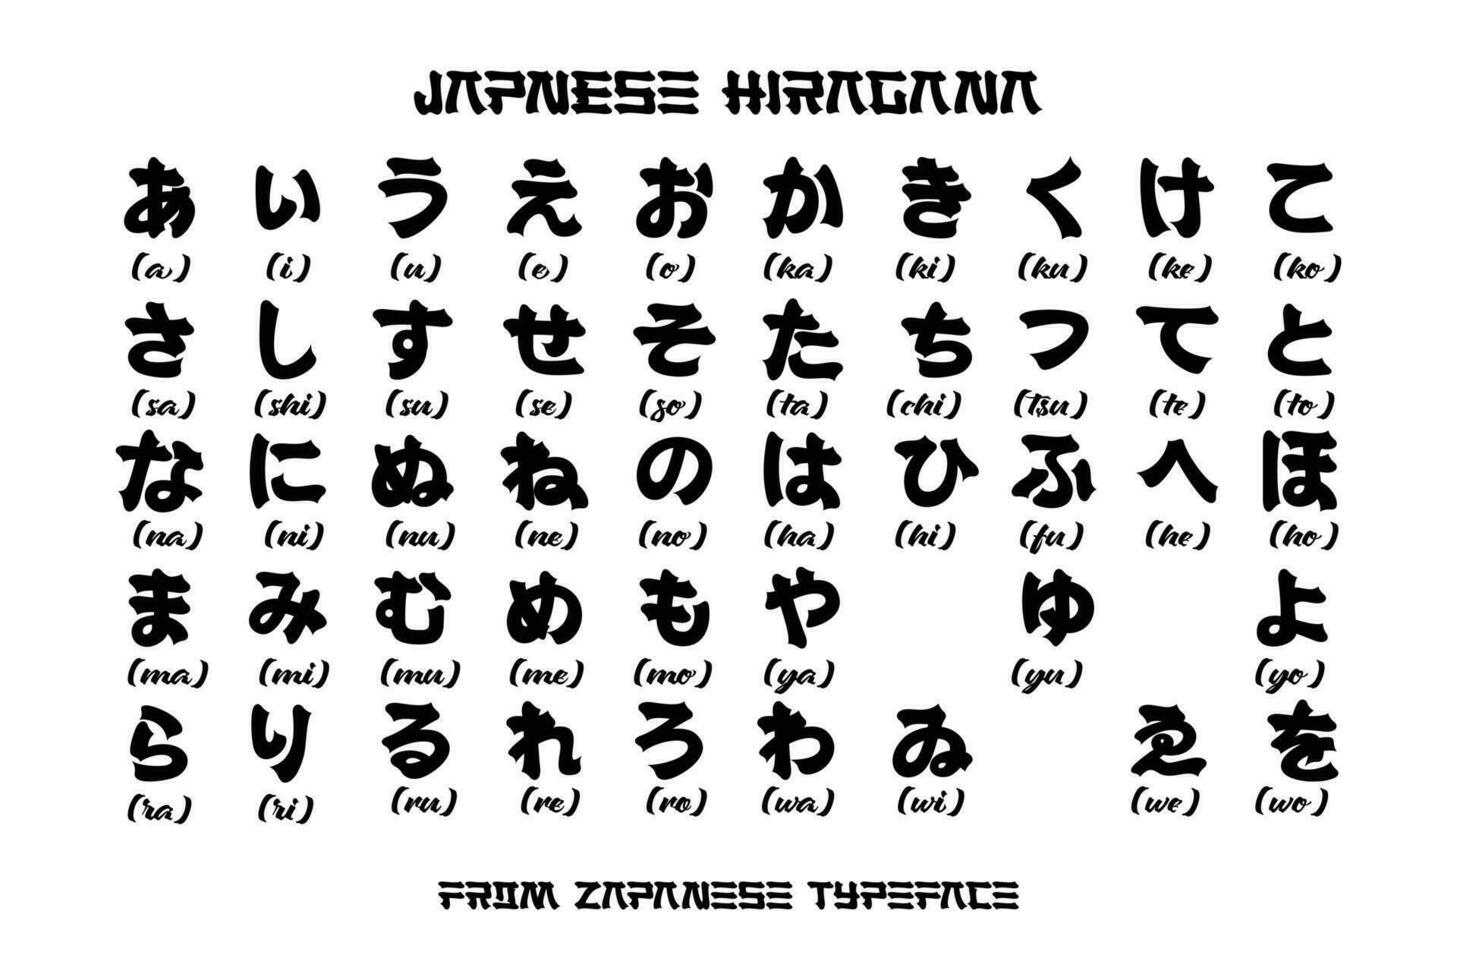 hiragana japansk alfabet. modern borsta stroke. element isolerat på en vit bakgrund. vektor